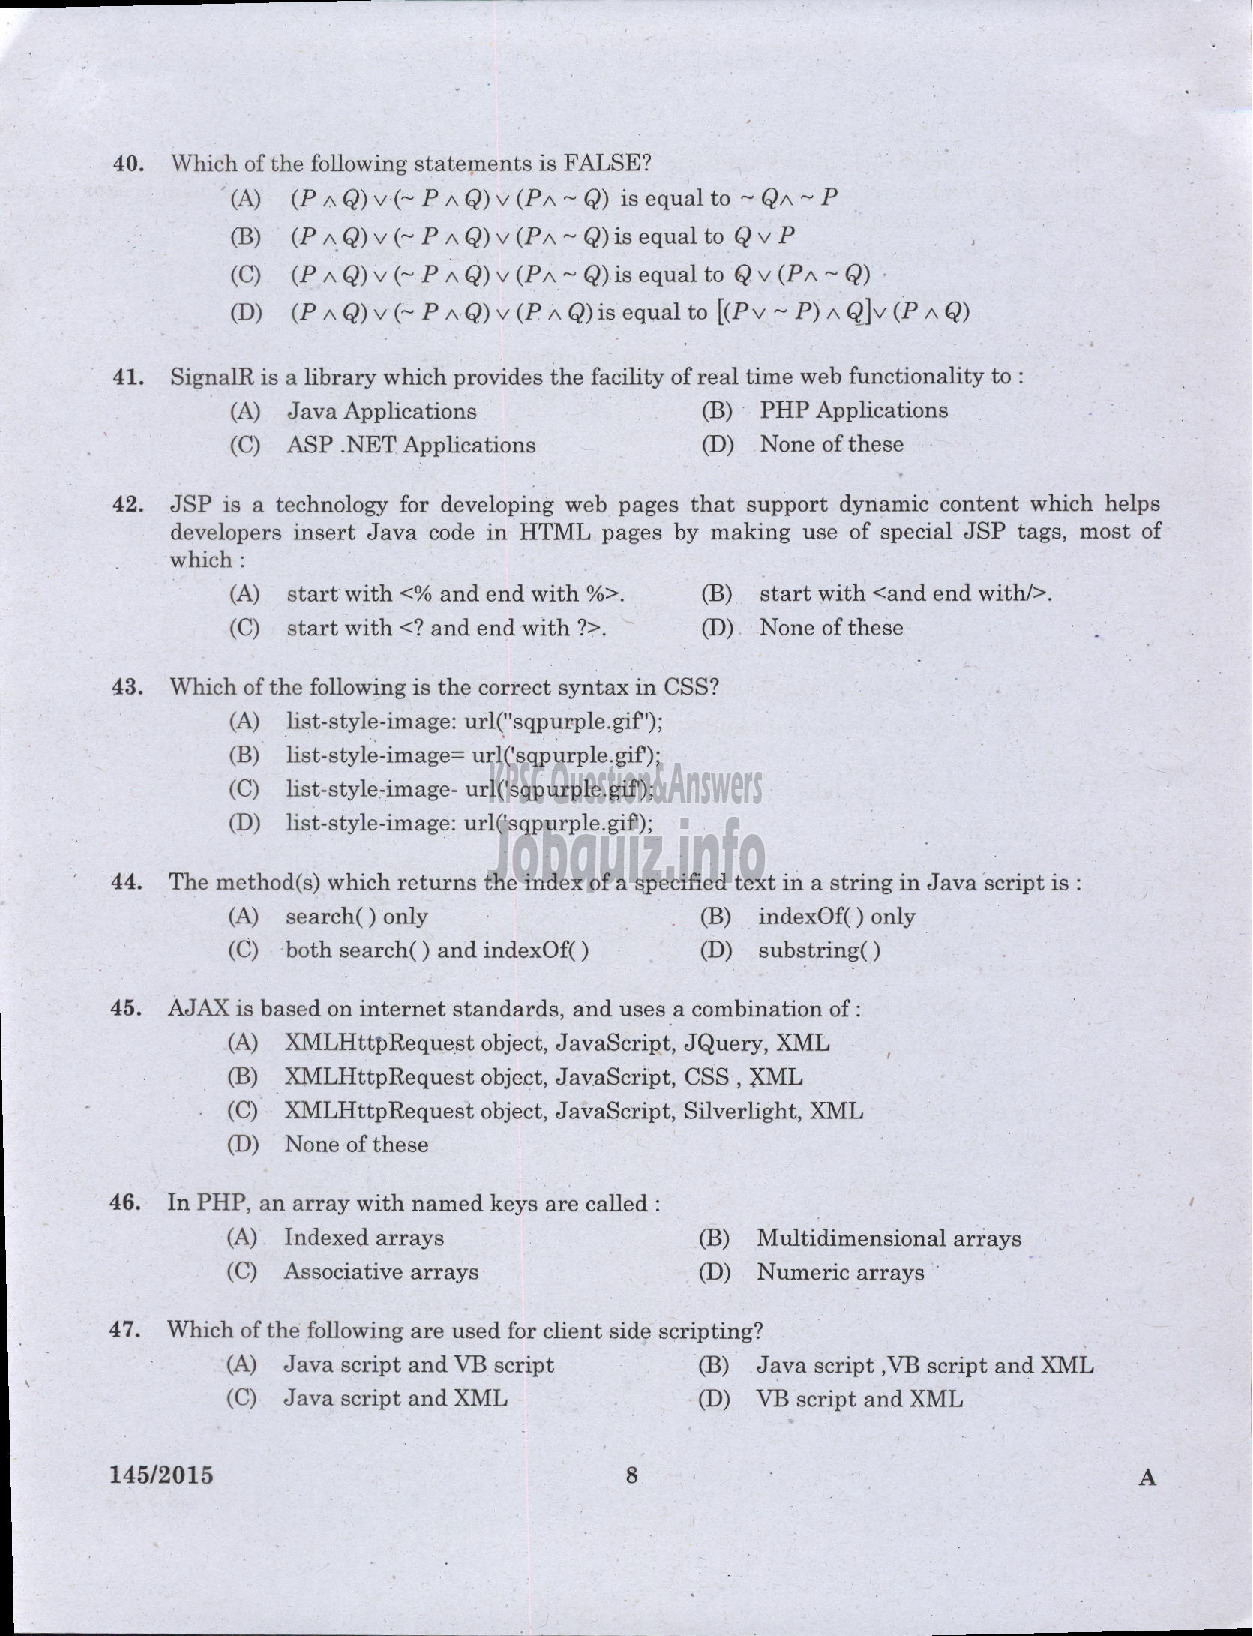 Kerala PSC Question Paper - PROGRAMMER KPSC-6